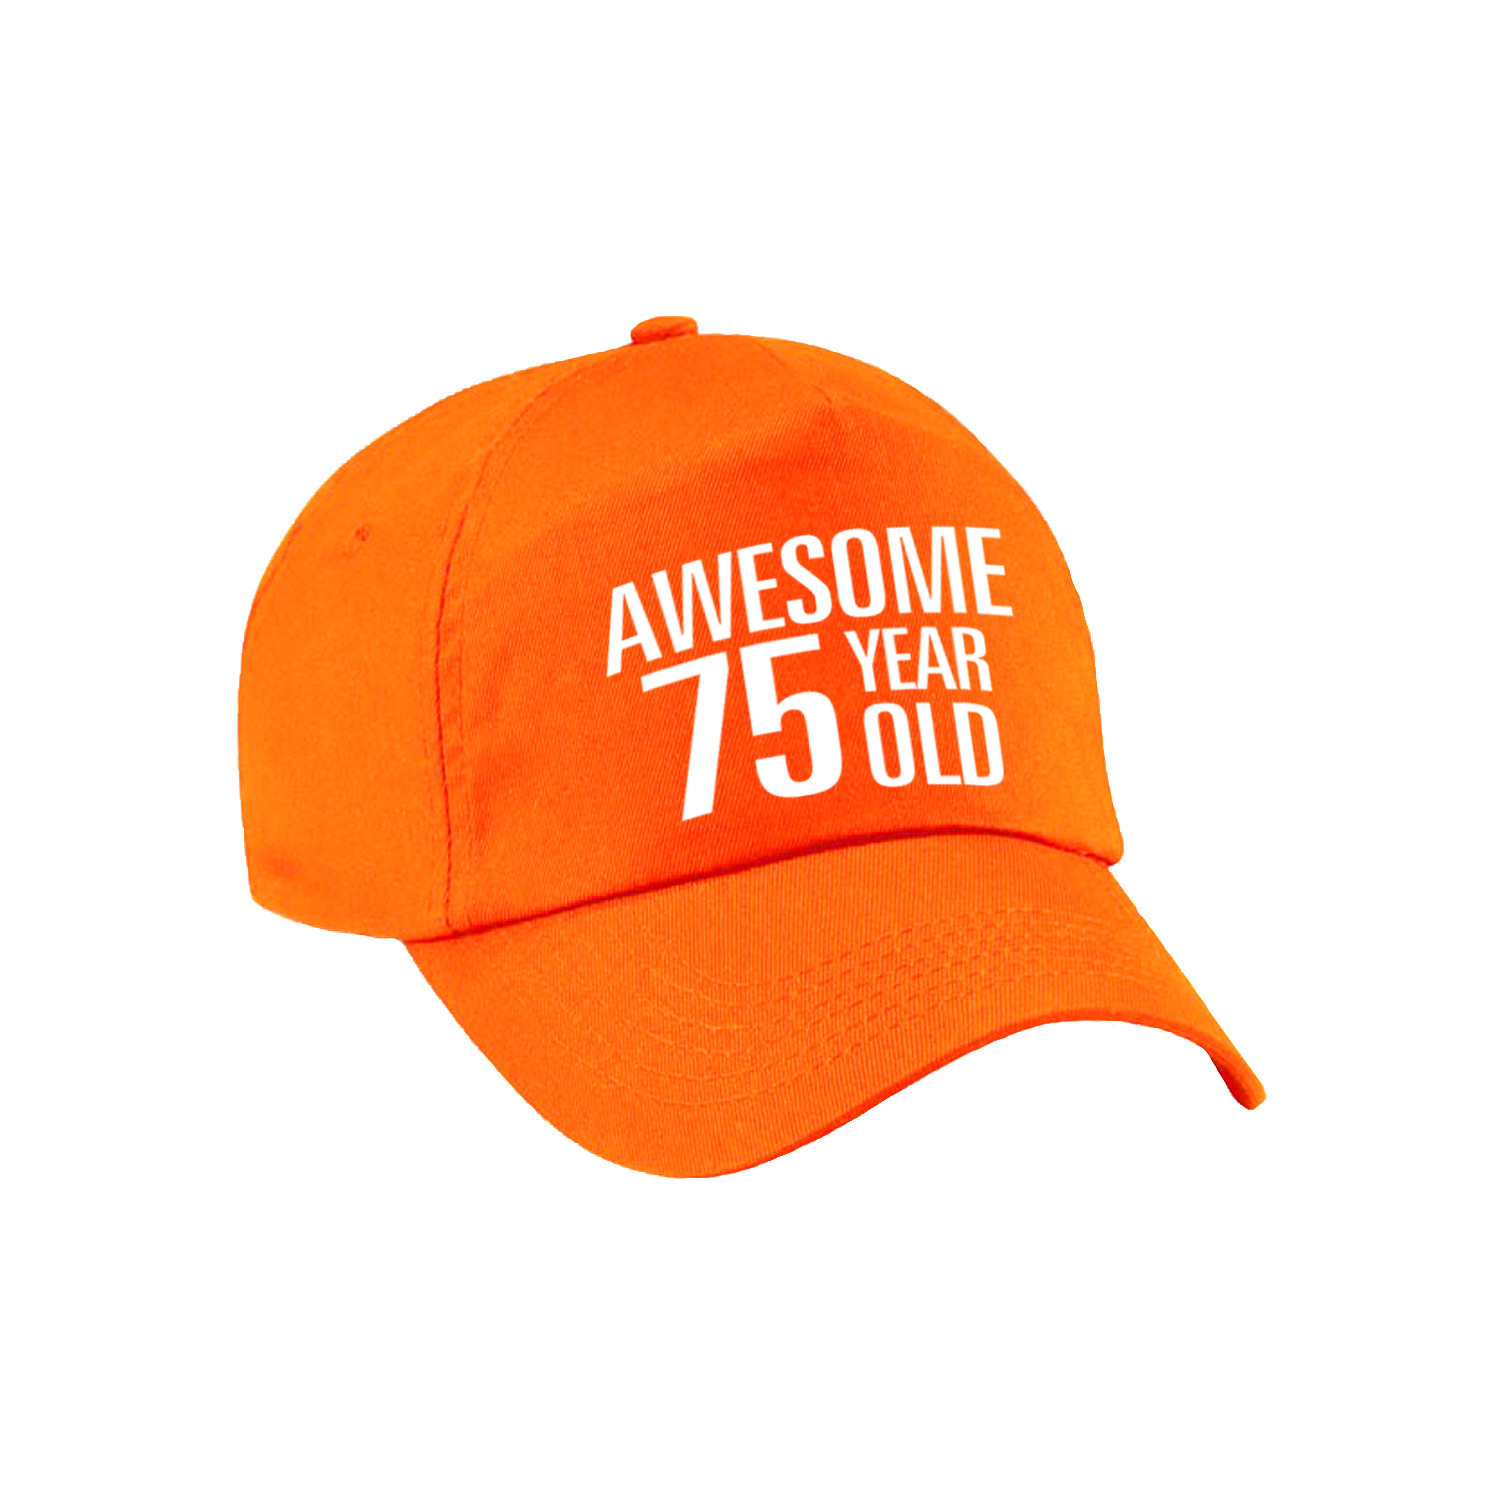 Awesome 75 year old verjaardag pet-cap oranje voor dames en heren